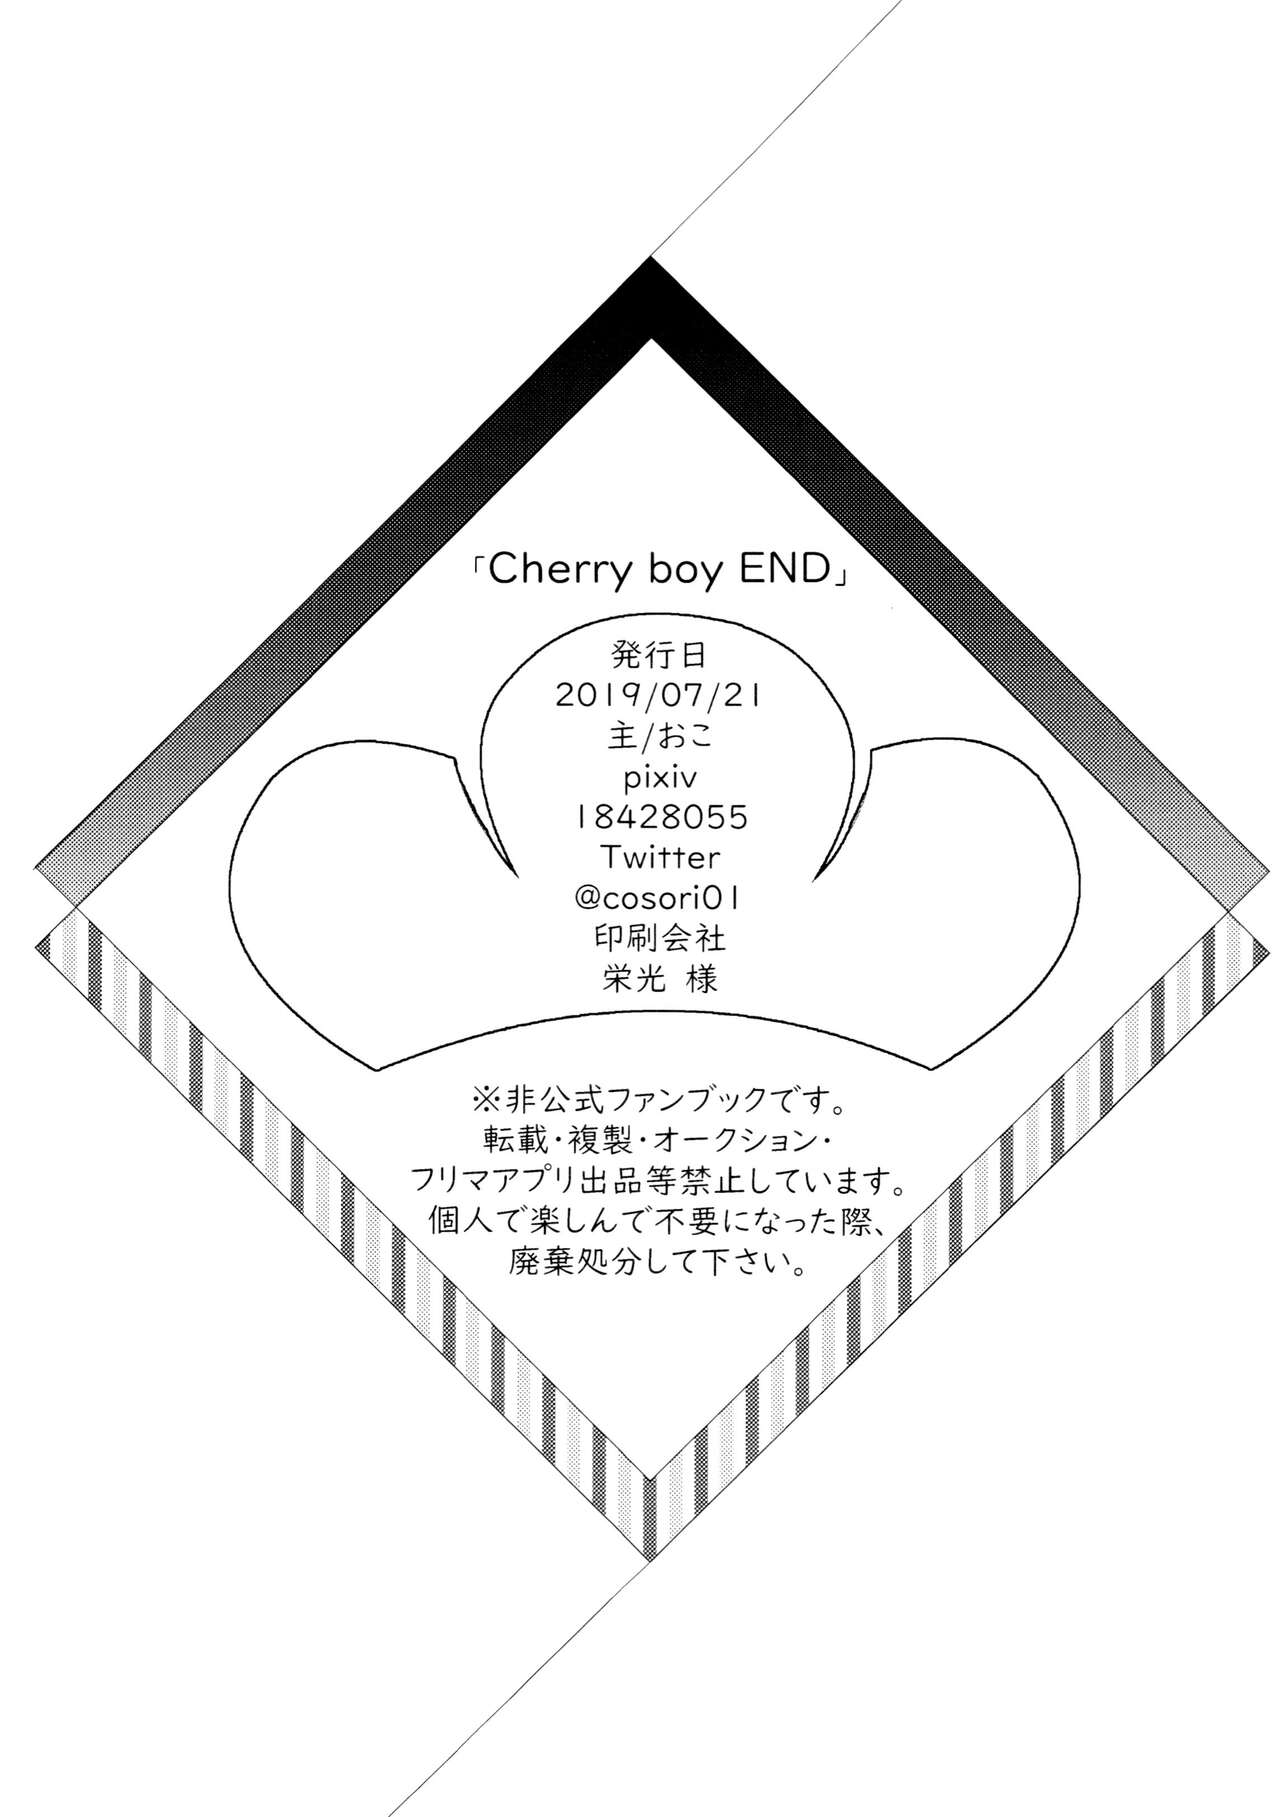 Cherry boy END